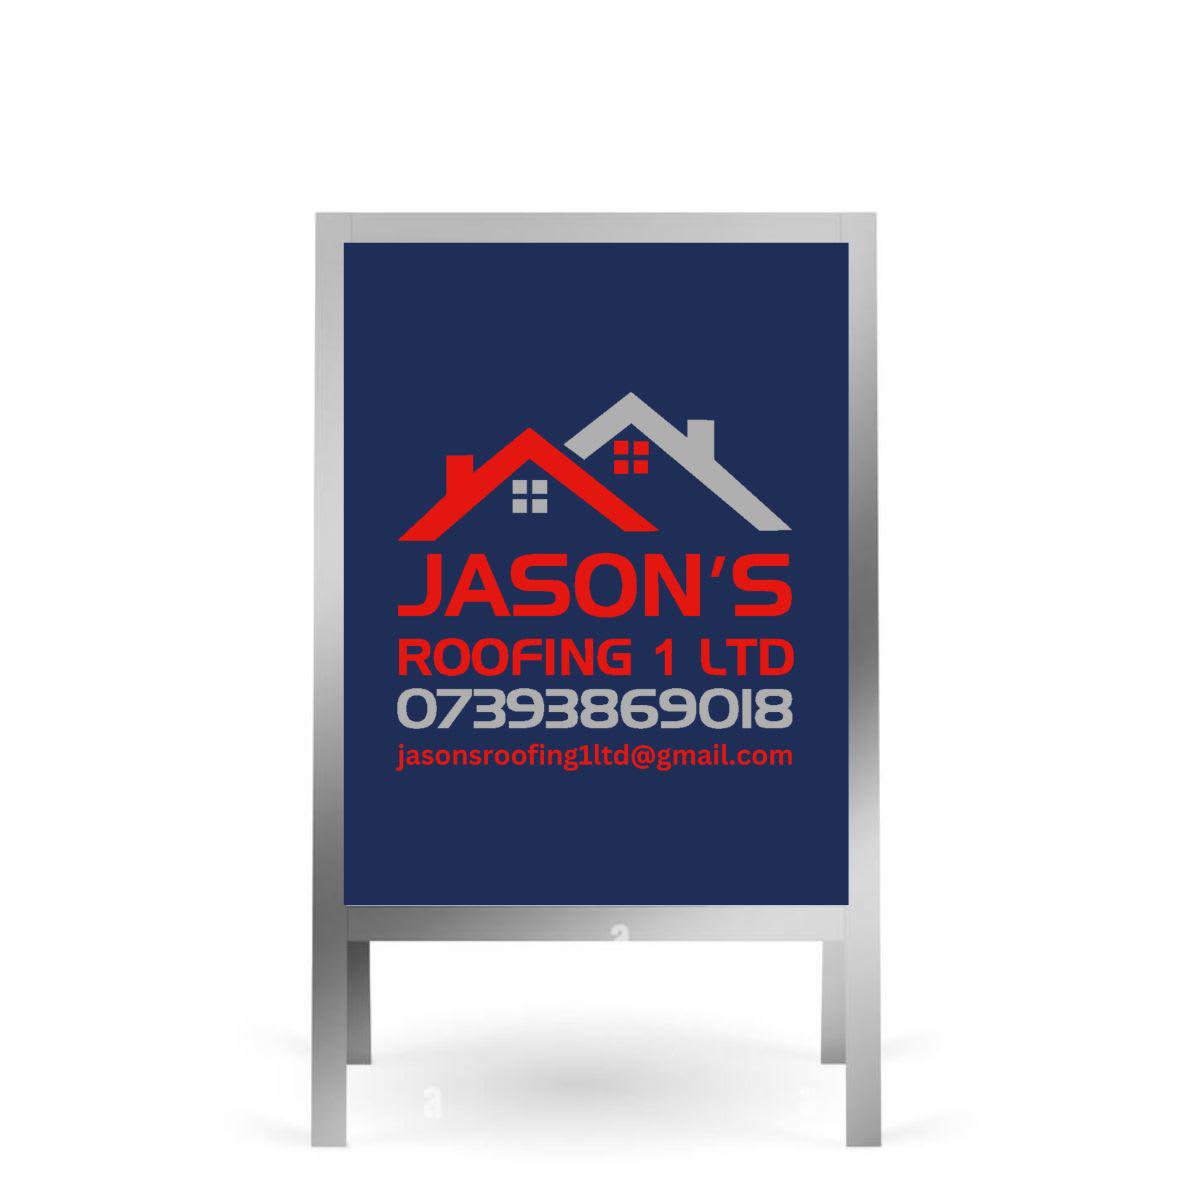 Images Jason's Roofing 1 Ltd